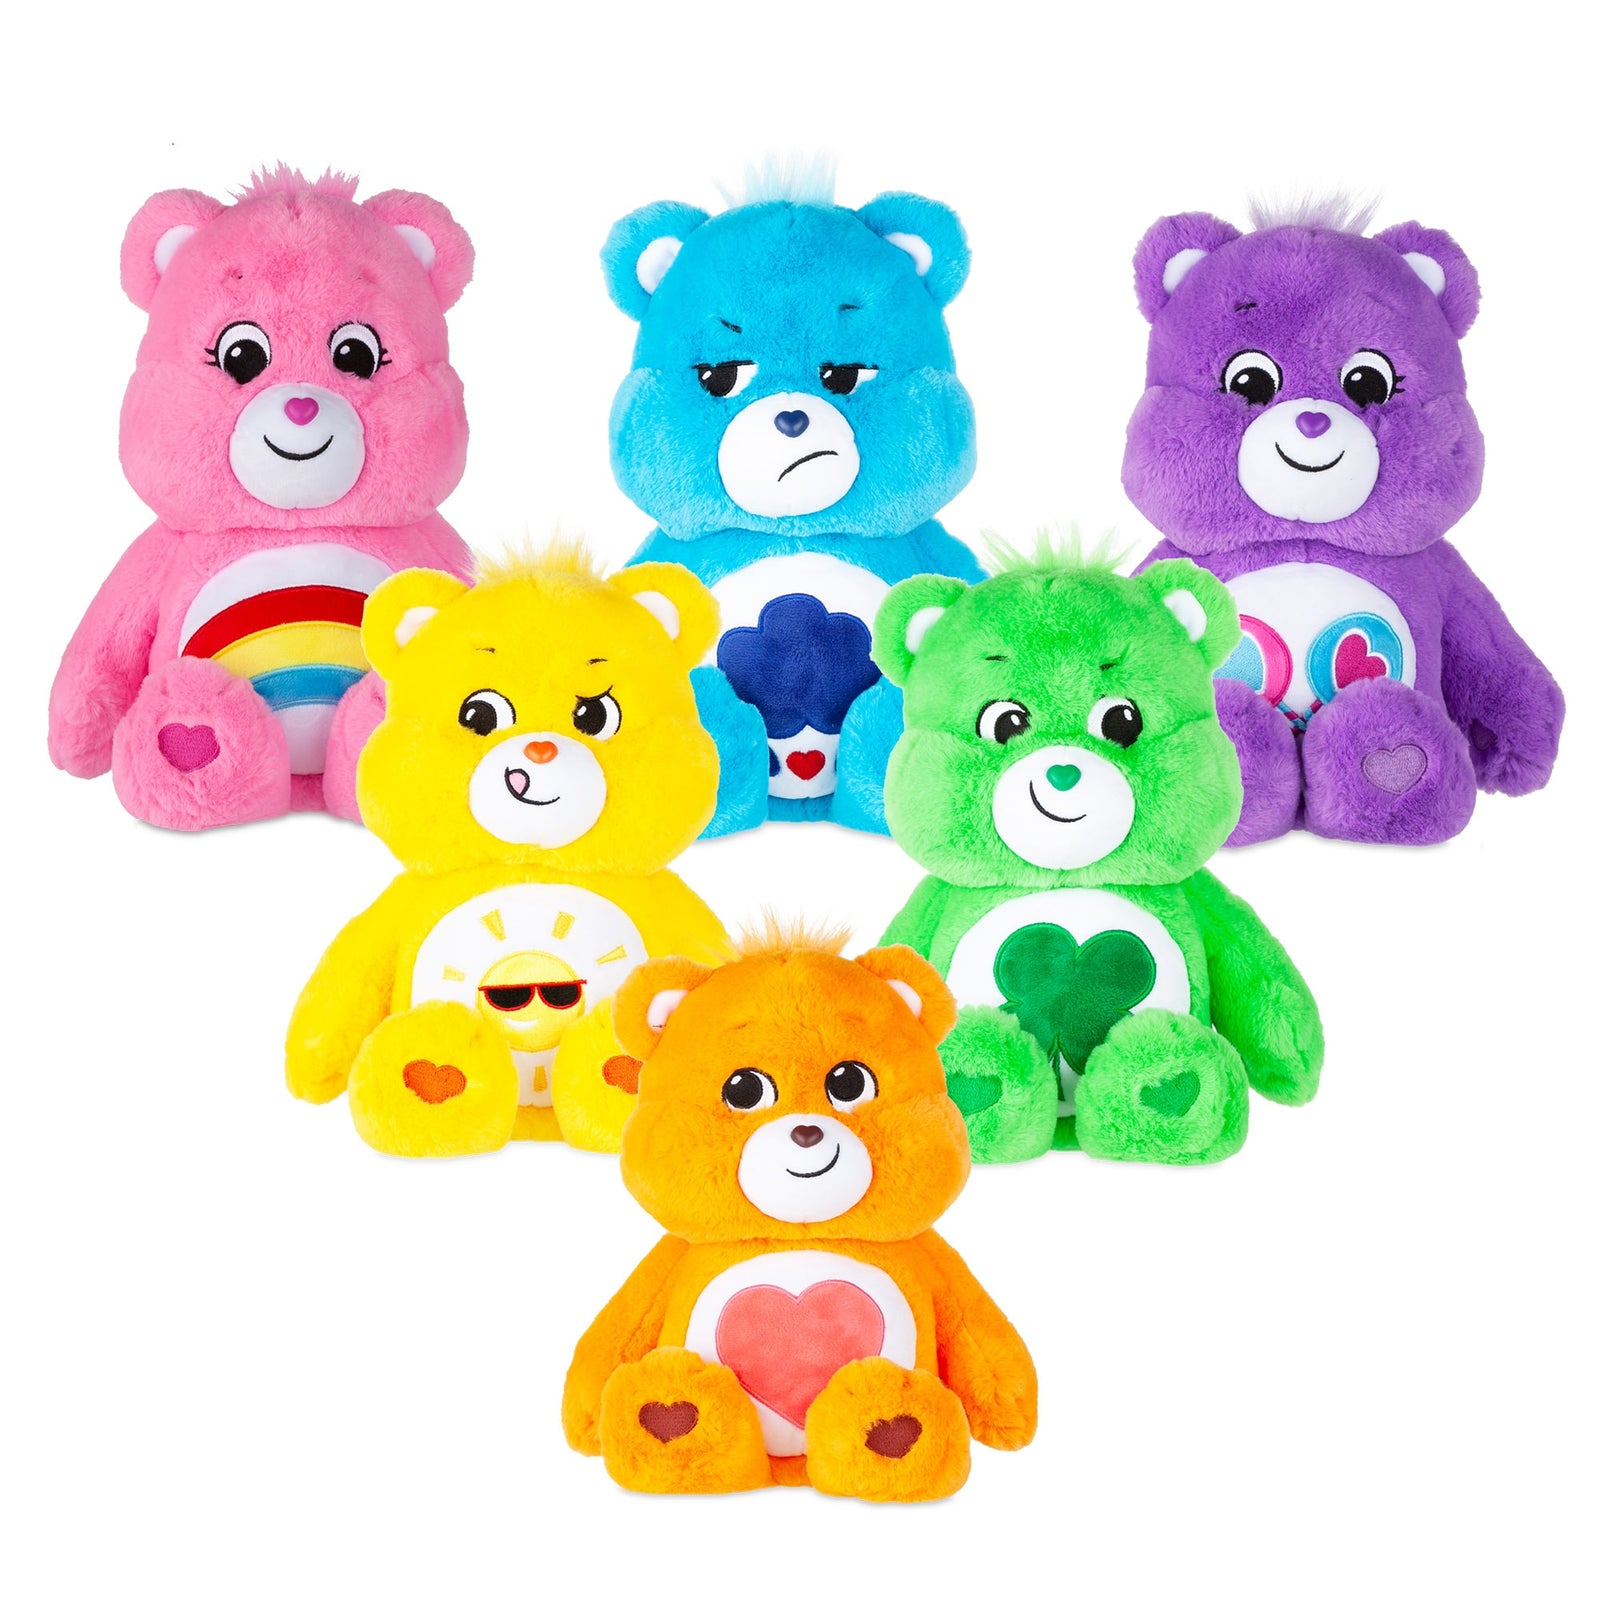 Care Bears Bean Plush - Toodleydoo Toys